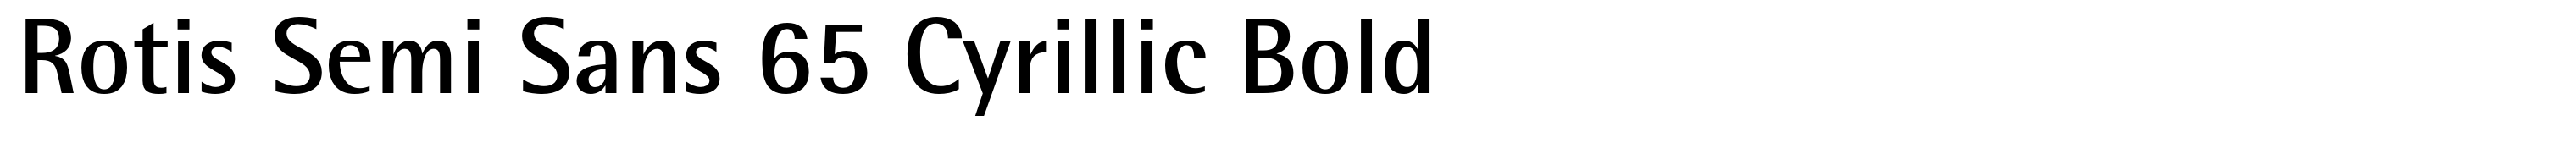 Rotis Semi Sans 65 Cyrillic Bold